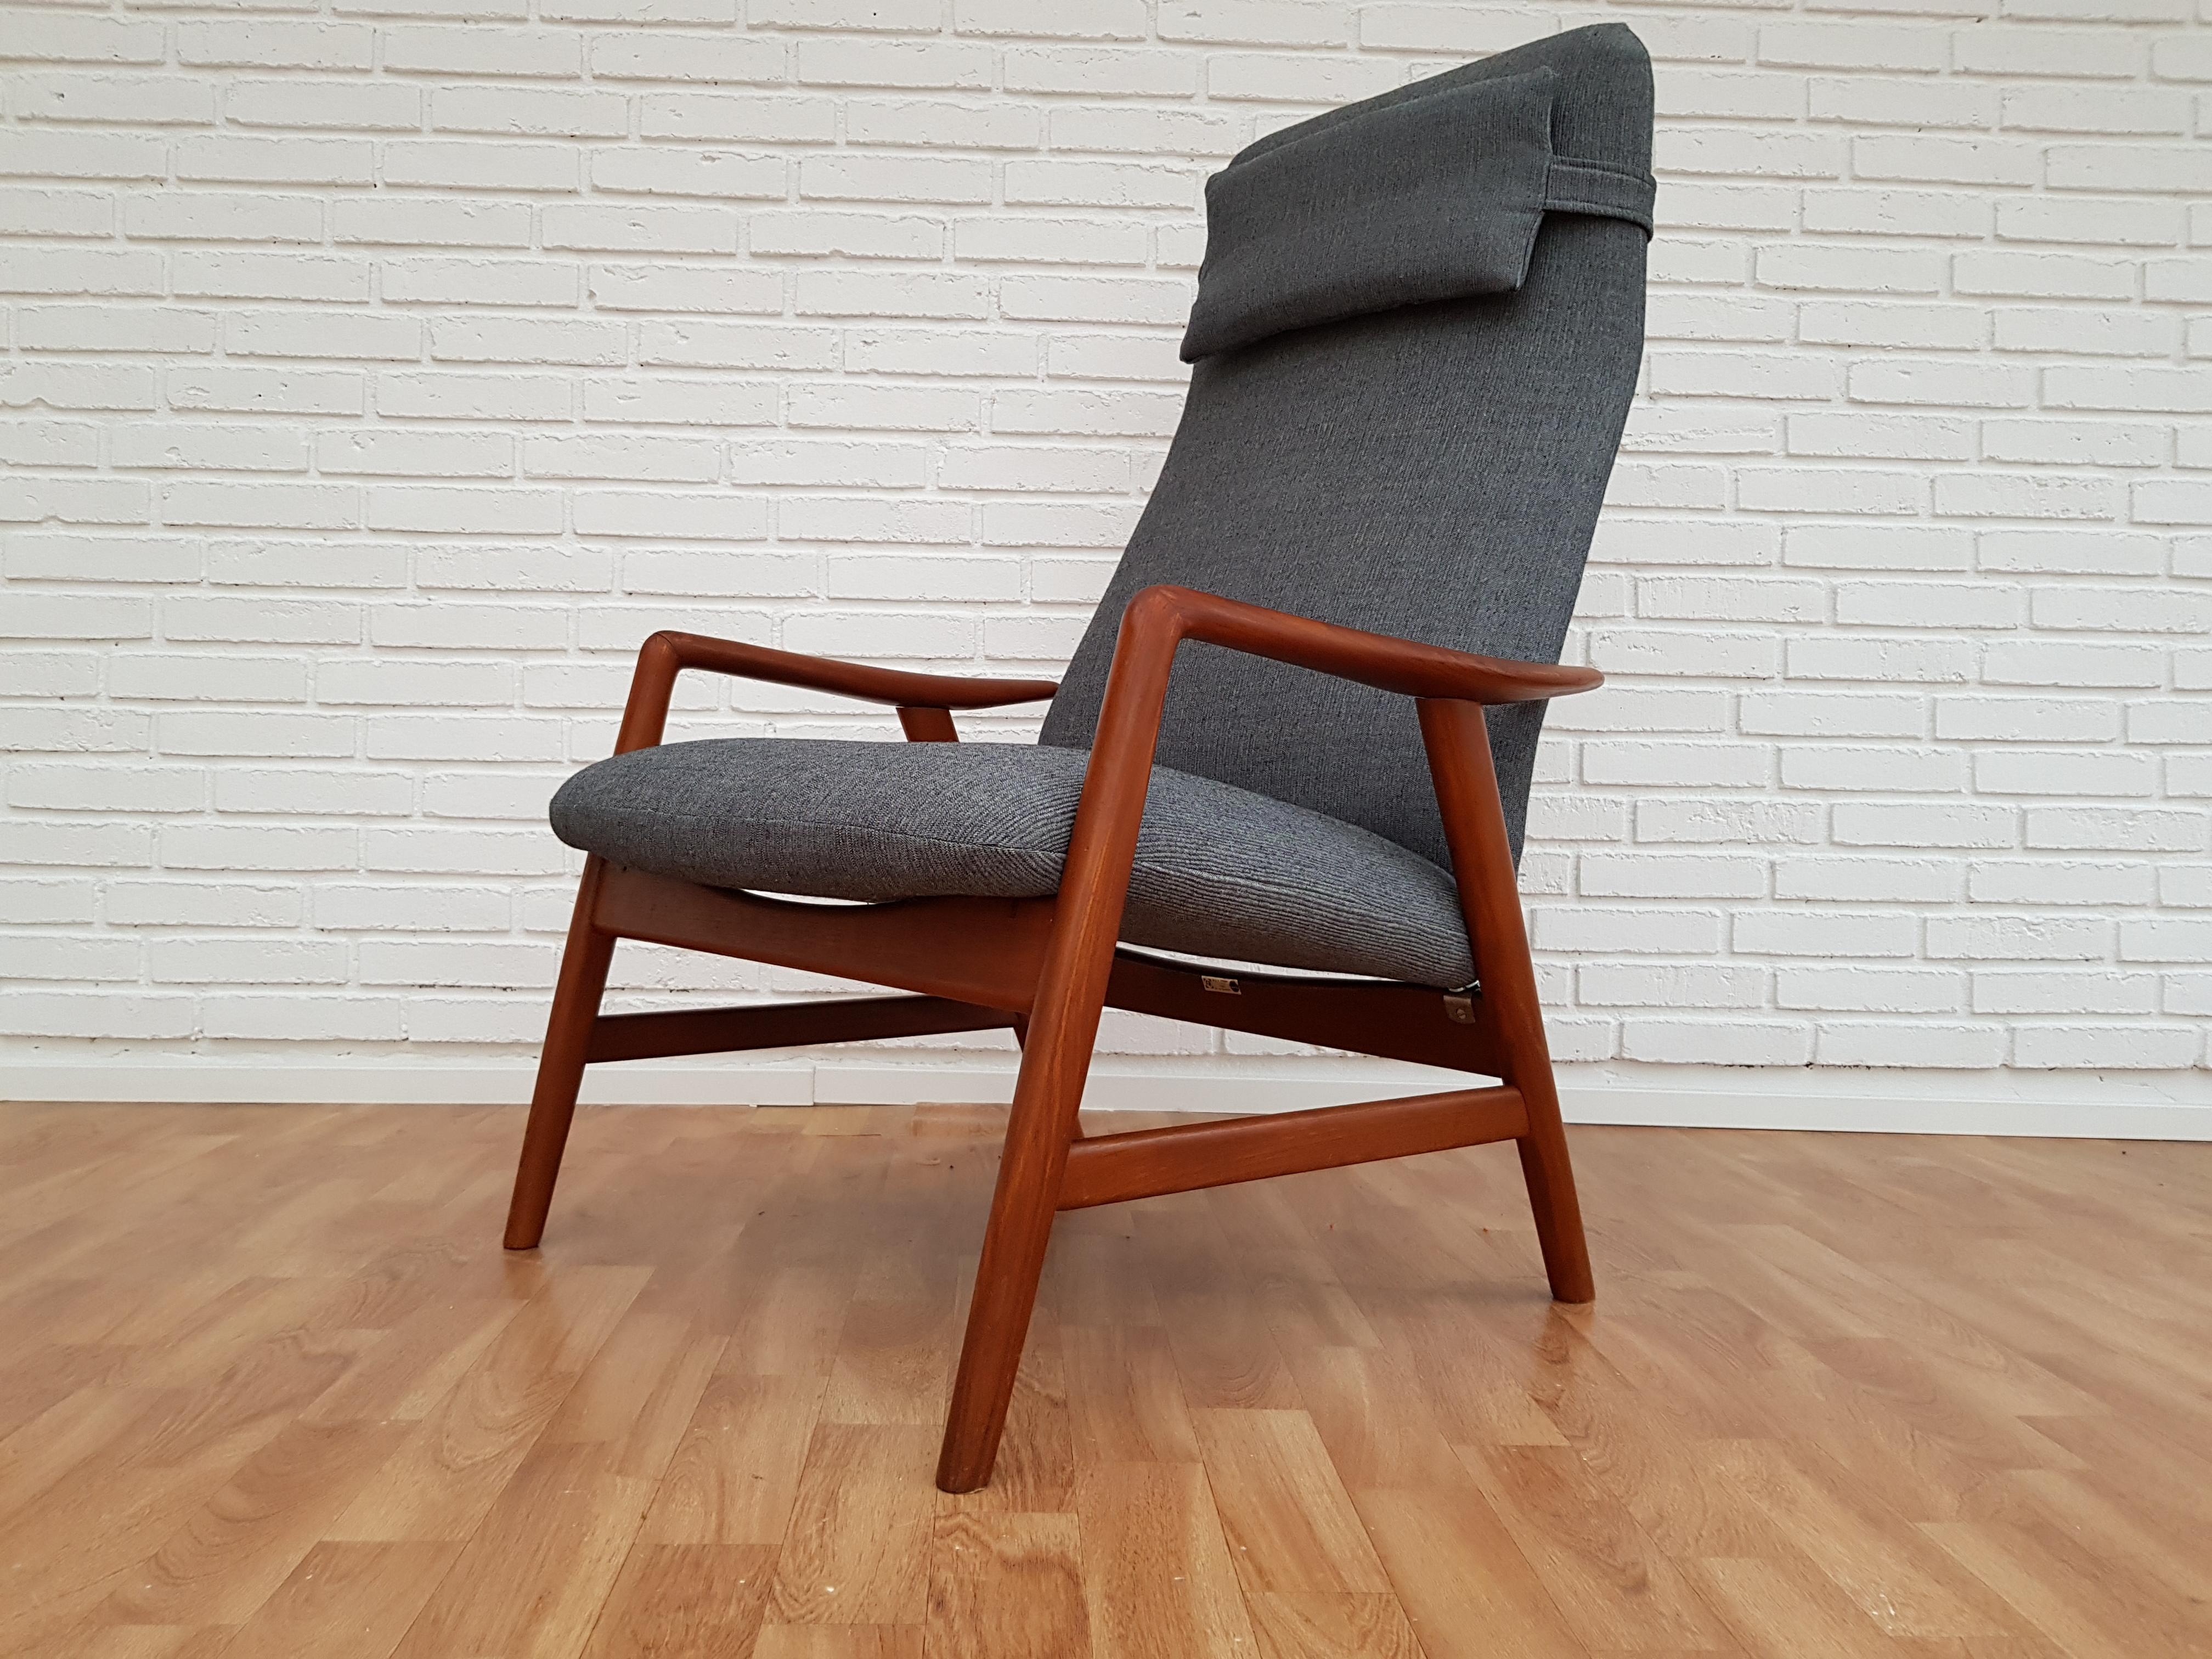 Alf Svensson. High-backed armchair, model Contour, teak wood frame, adjustable two-step seat / back. Neck pillow. Designed in 1957. Produced by Fritz Hansen. Completely restored by craftsman, furniture upholsterer at Retro Møbler Galleri. Brand new